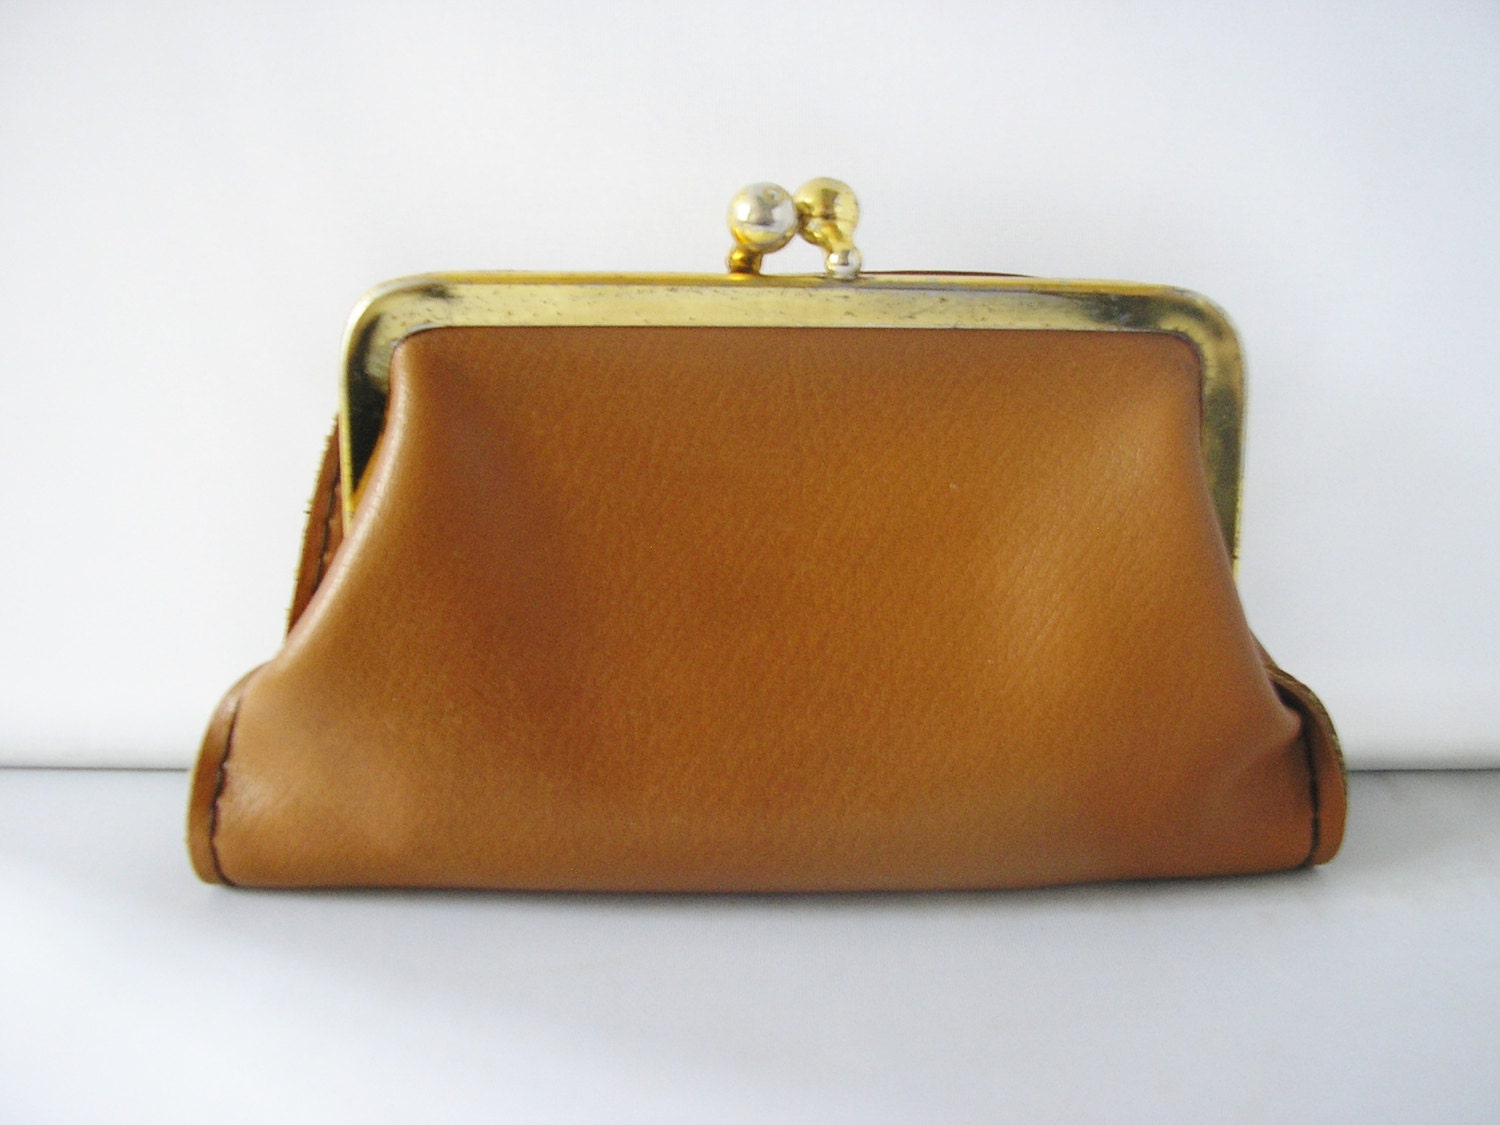 Vintage tan leather look purse coin change purse by TheIrishBarn